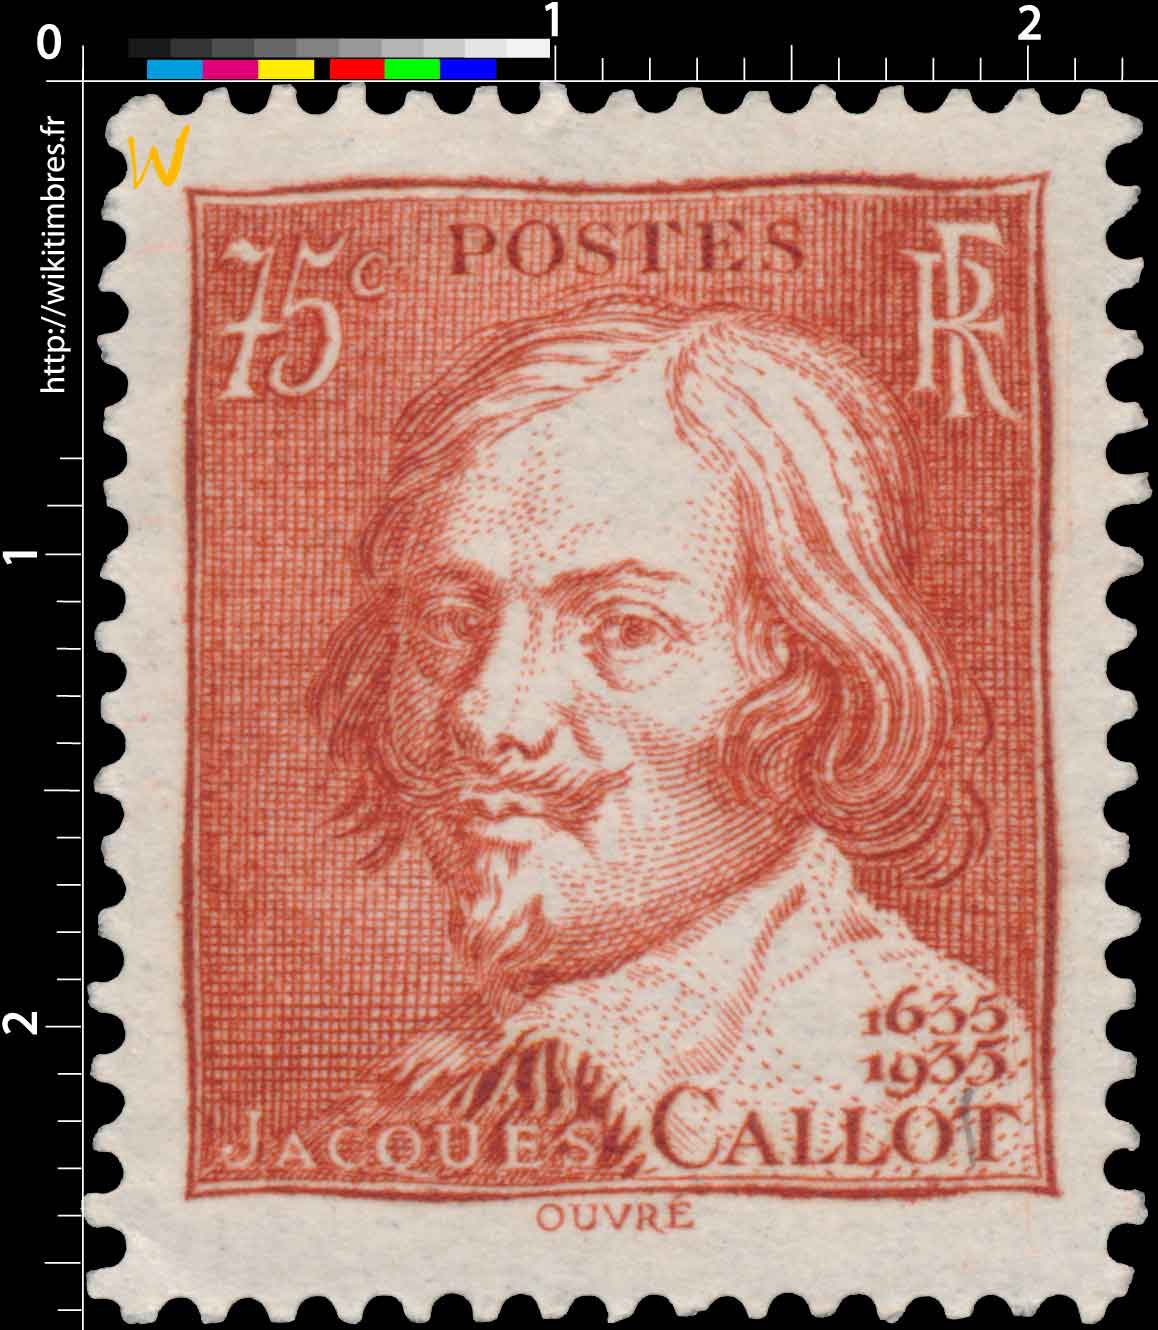 JACQUES CALLOT 1635-1935